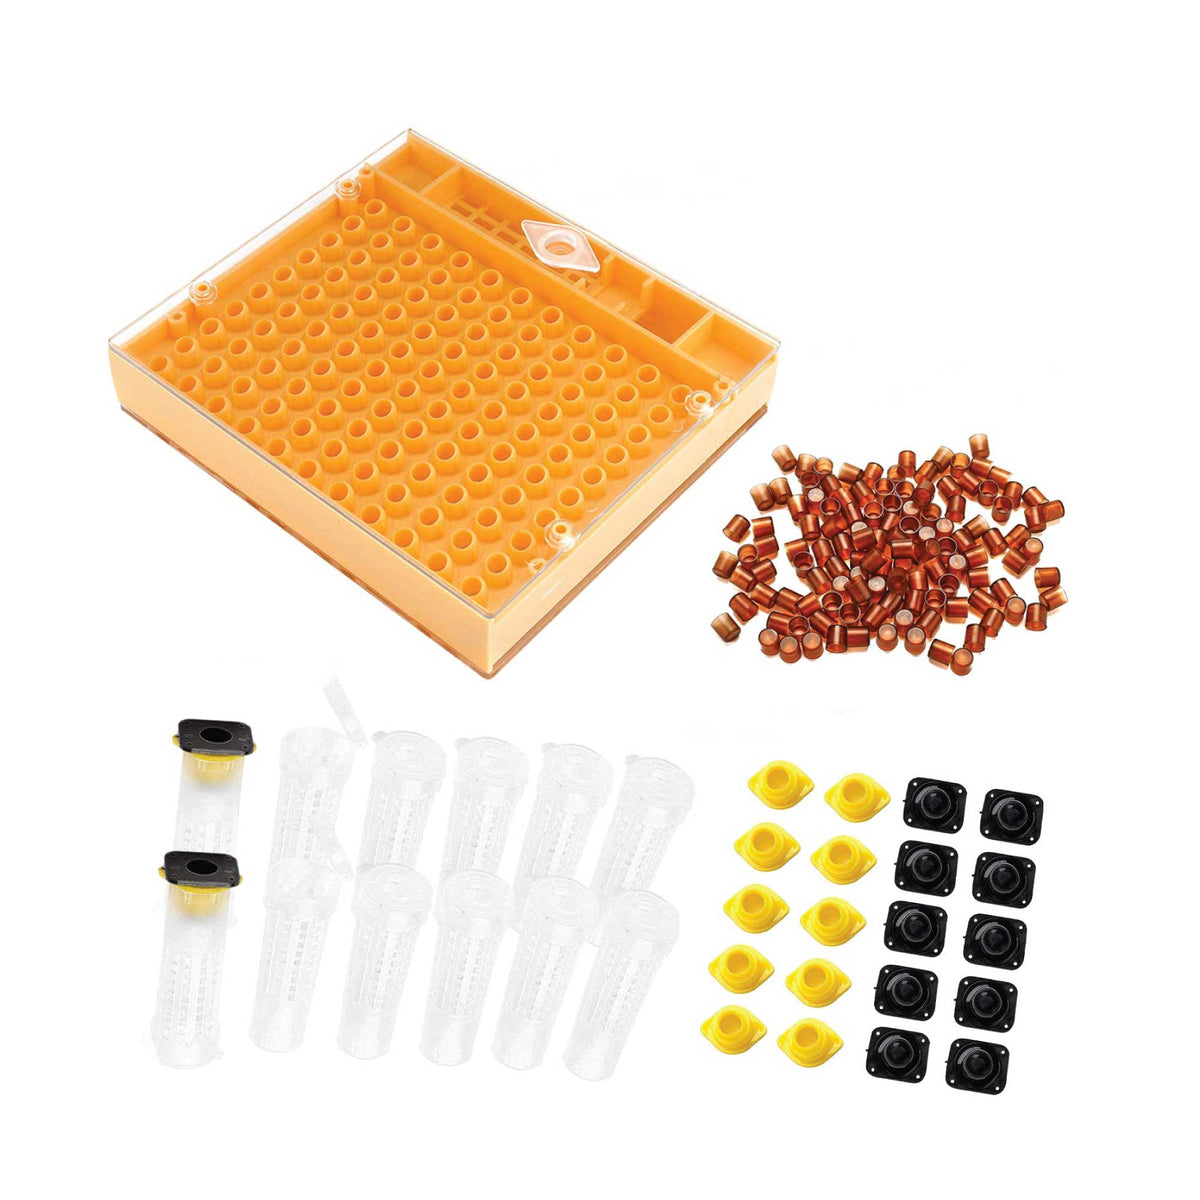 Nicot Queen Bee Rearing System Kit - Basic No Graft Jenter Starter Beekeeping